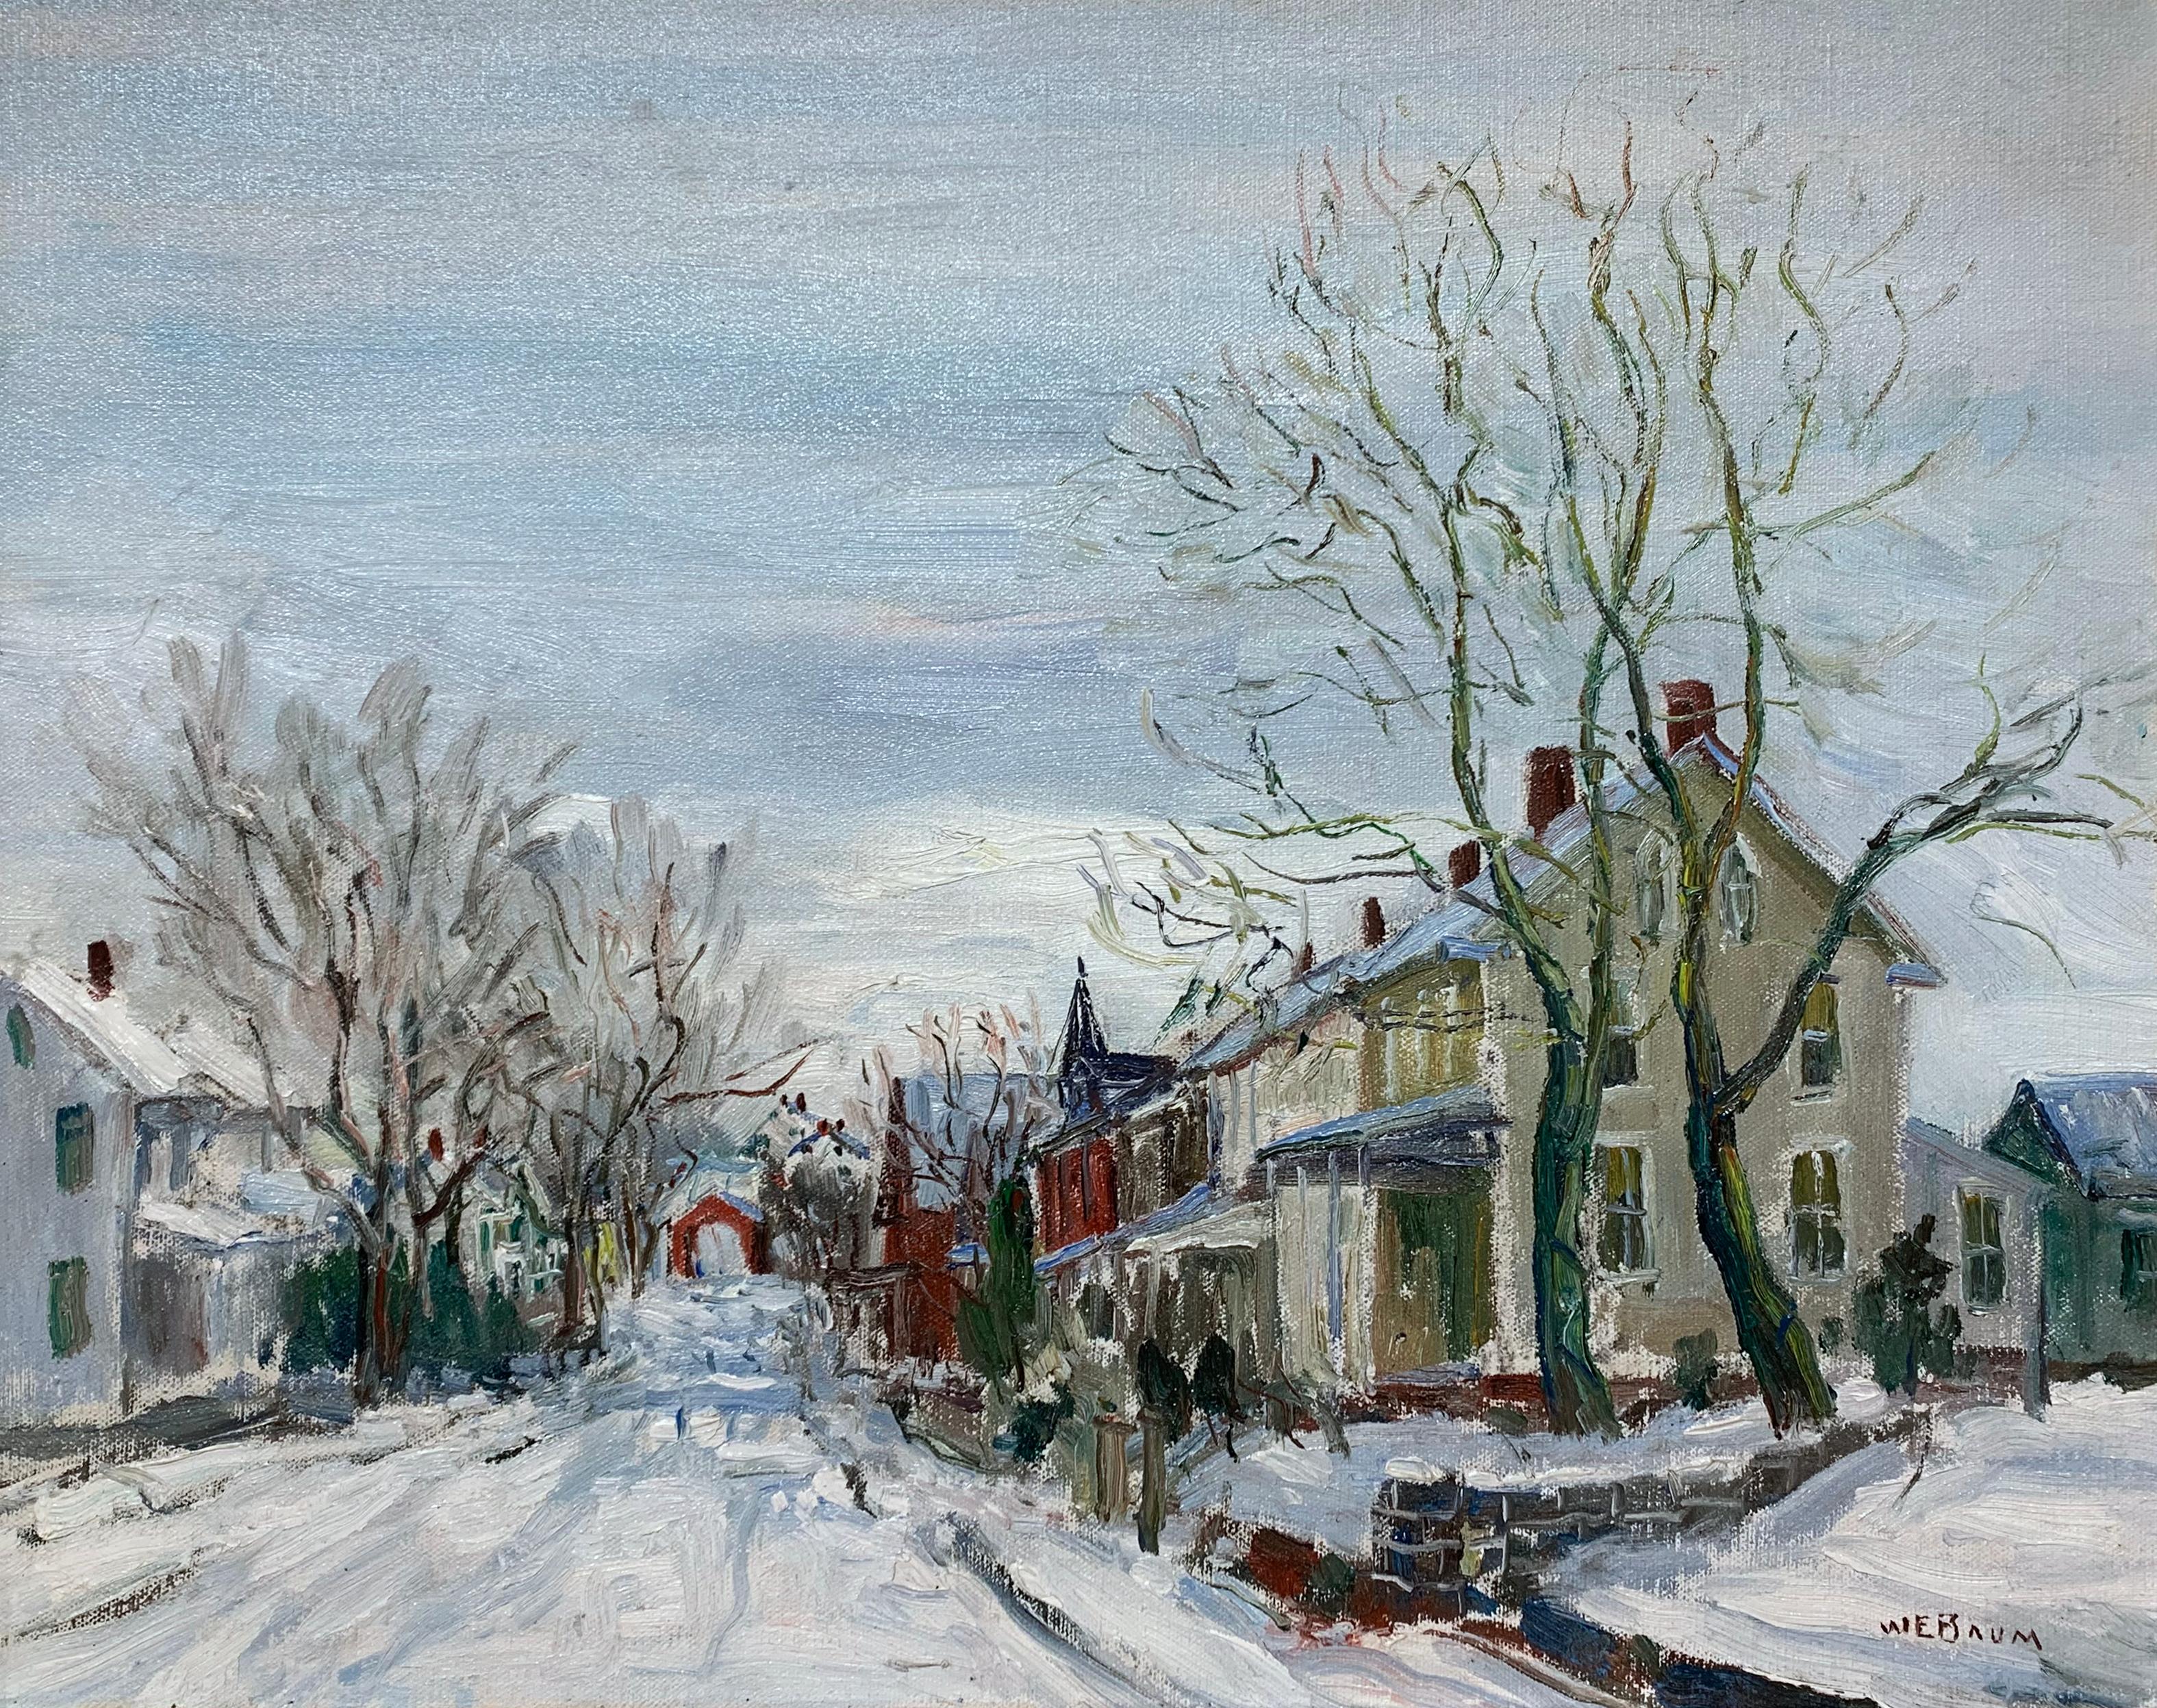 Walter Emerson Baum Landscape Painting - South Perkasie PA, Regional Pennsylvania Impressionist Winter Snow Landscape